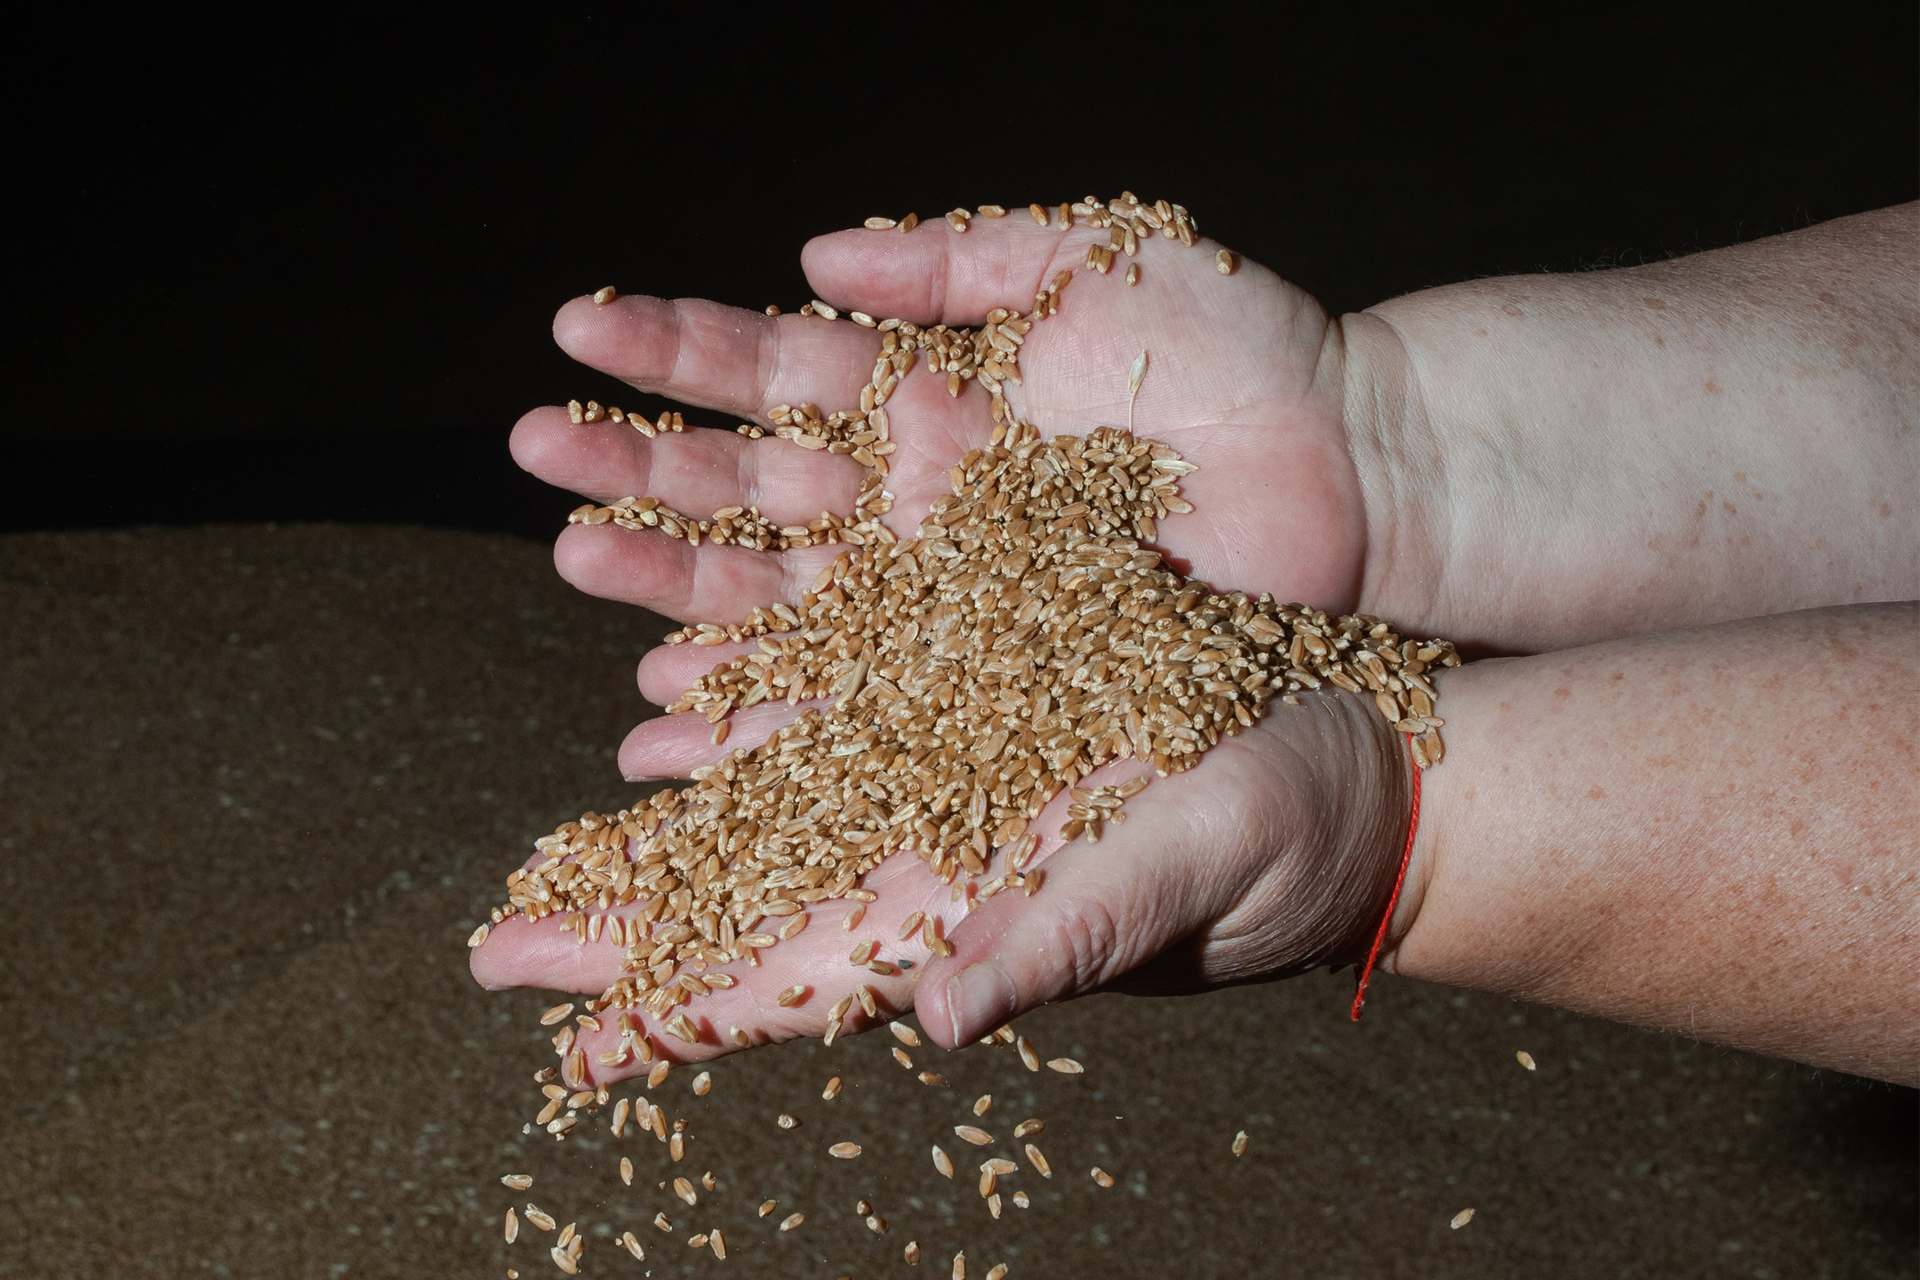 Grains slipping through a person's hands